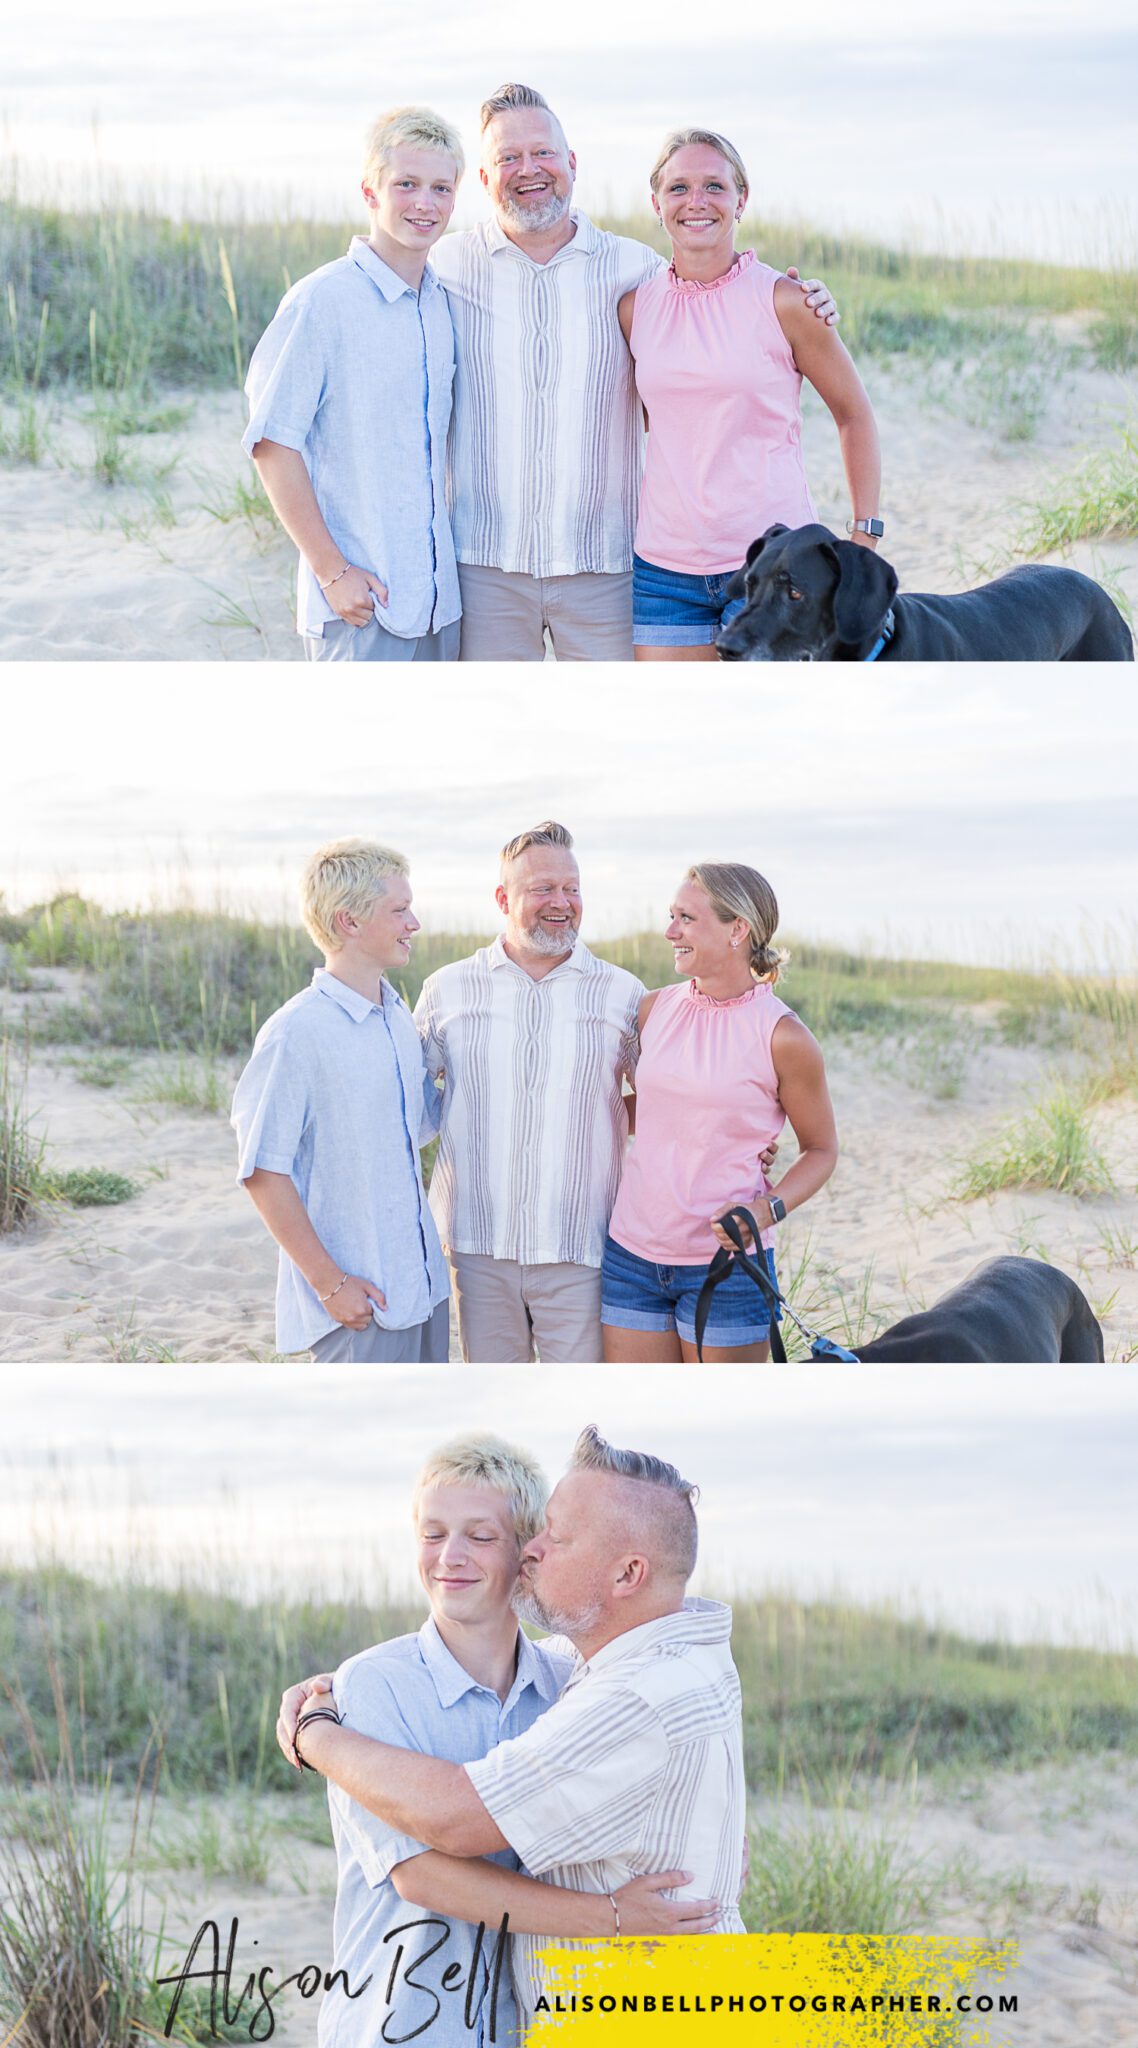 Virginia beach family photographer Alison Bell, Photographer